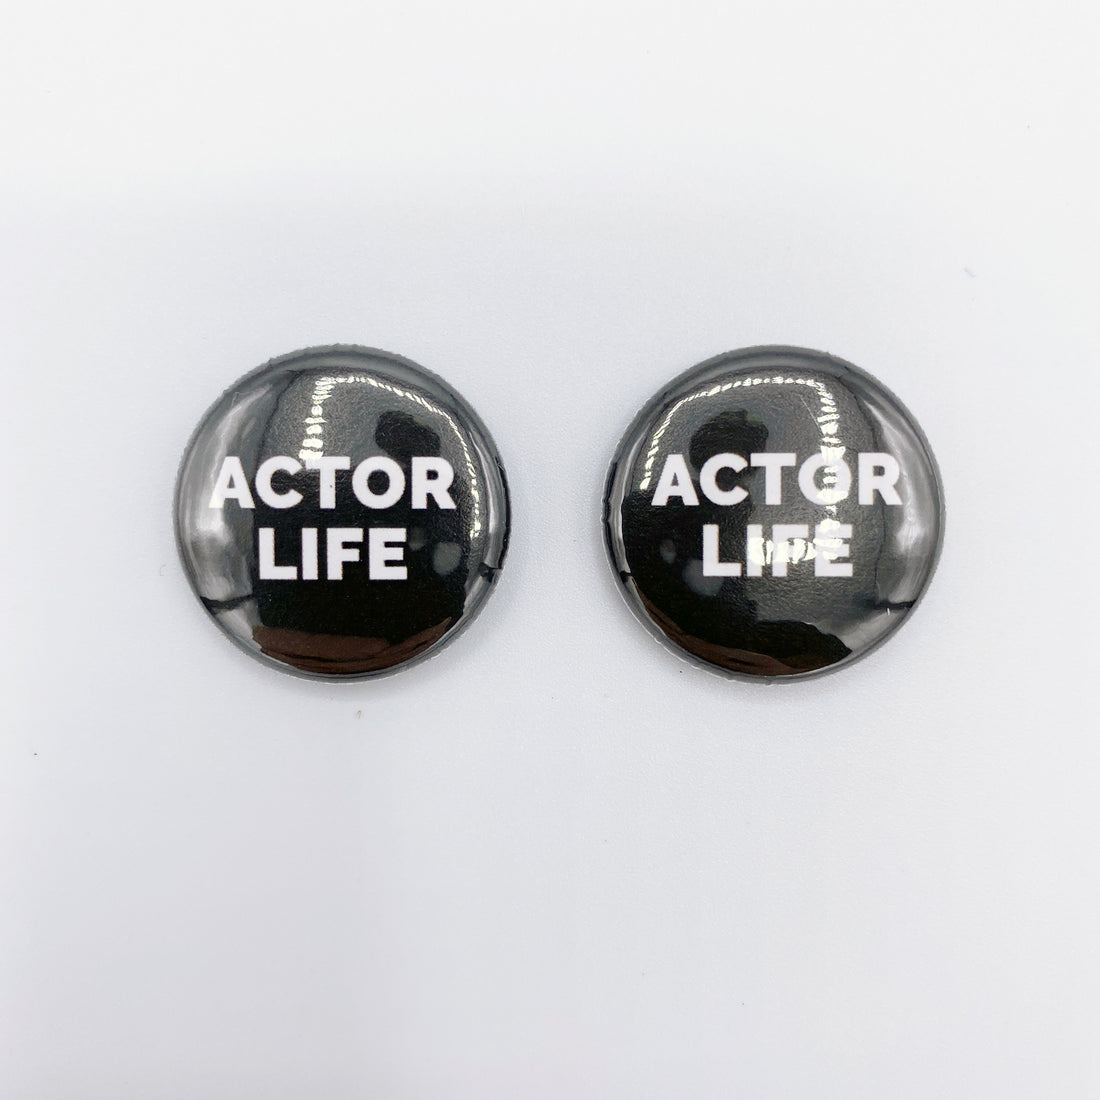 Actor Life Badge